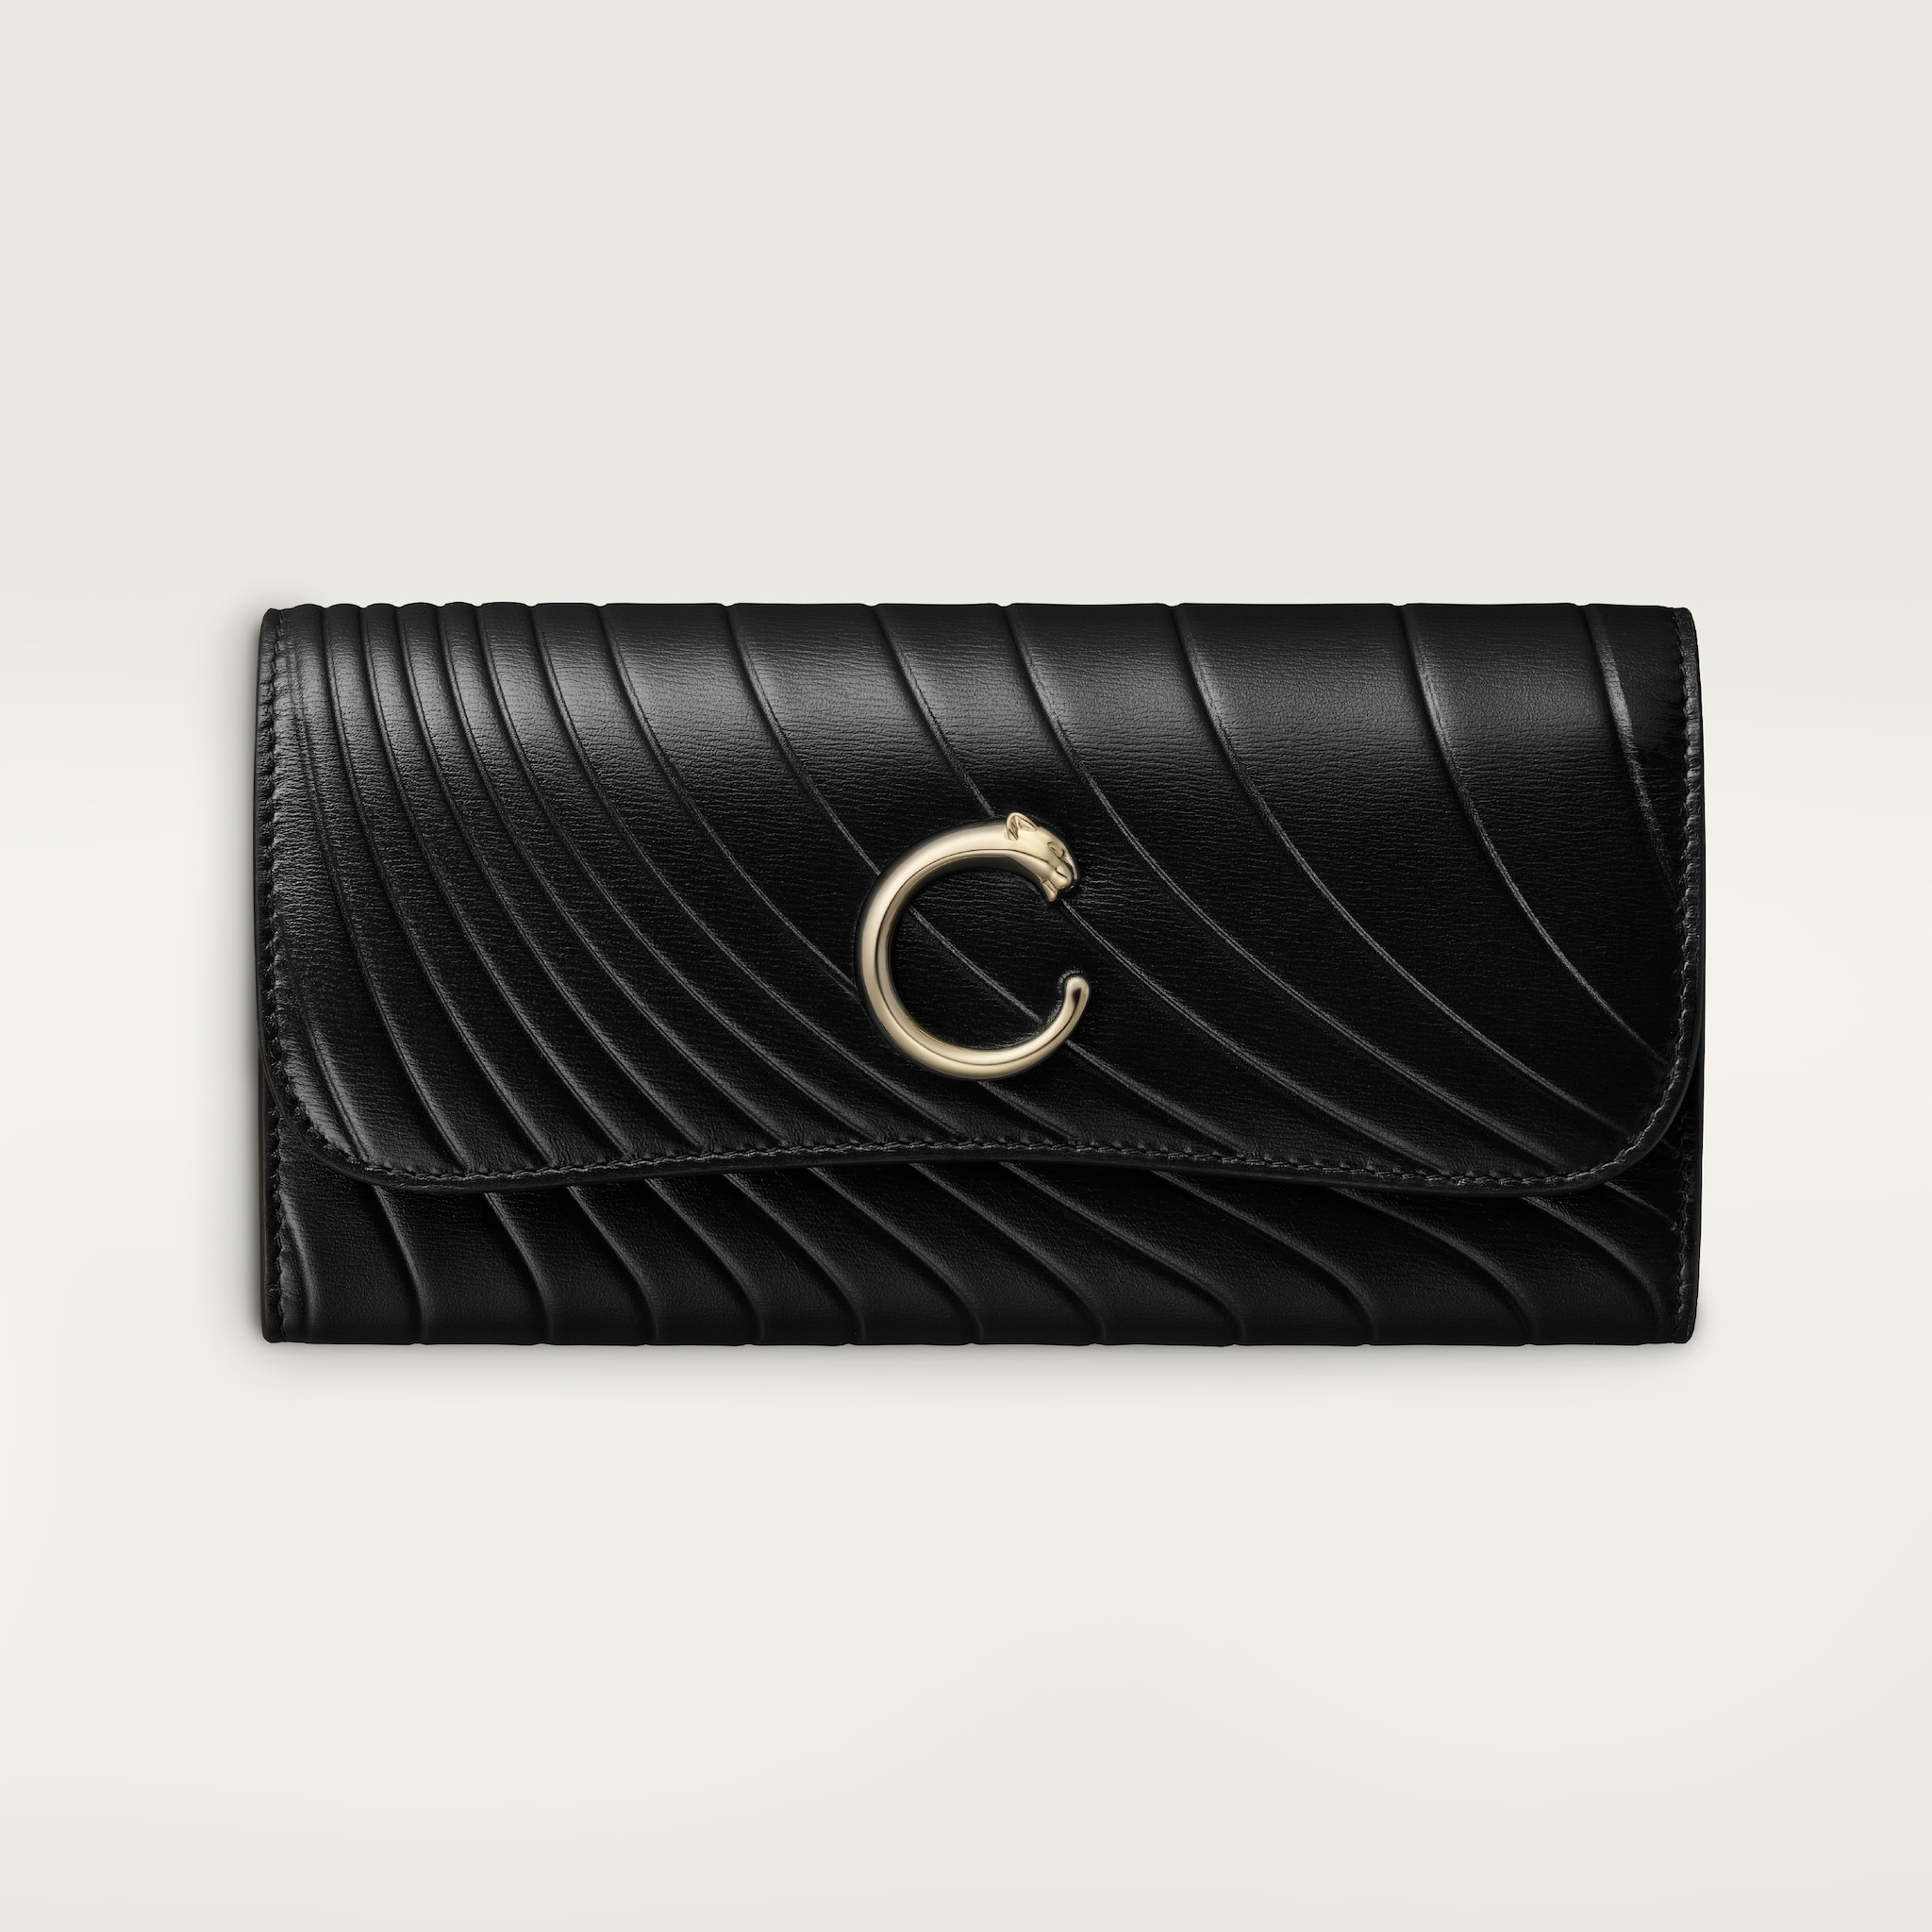 International wallet with flap, Panthère de CartierBlack calfskin with embossed Cartier signature motif, golden finish